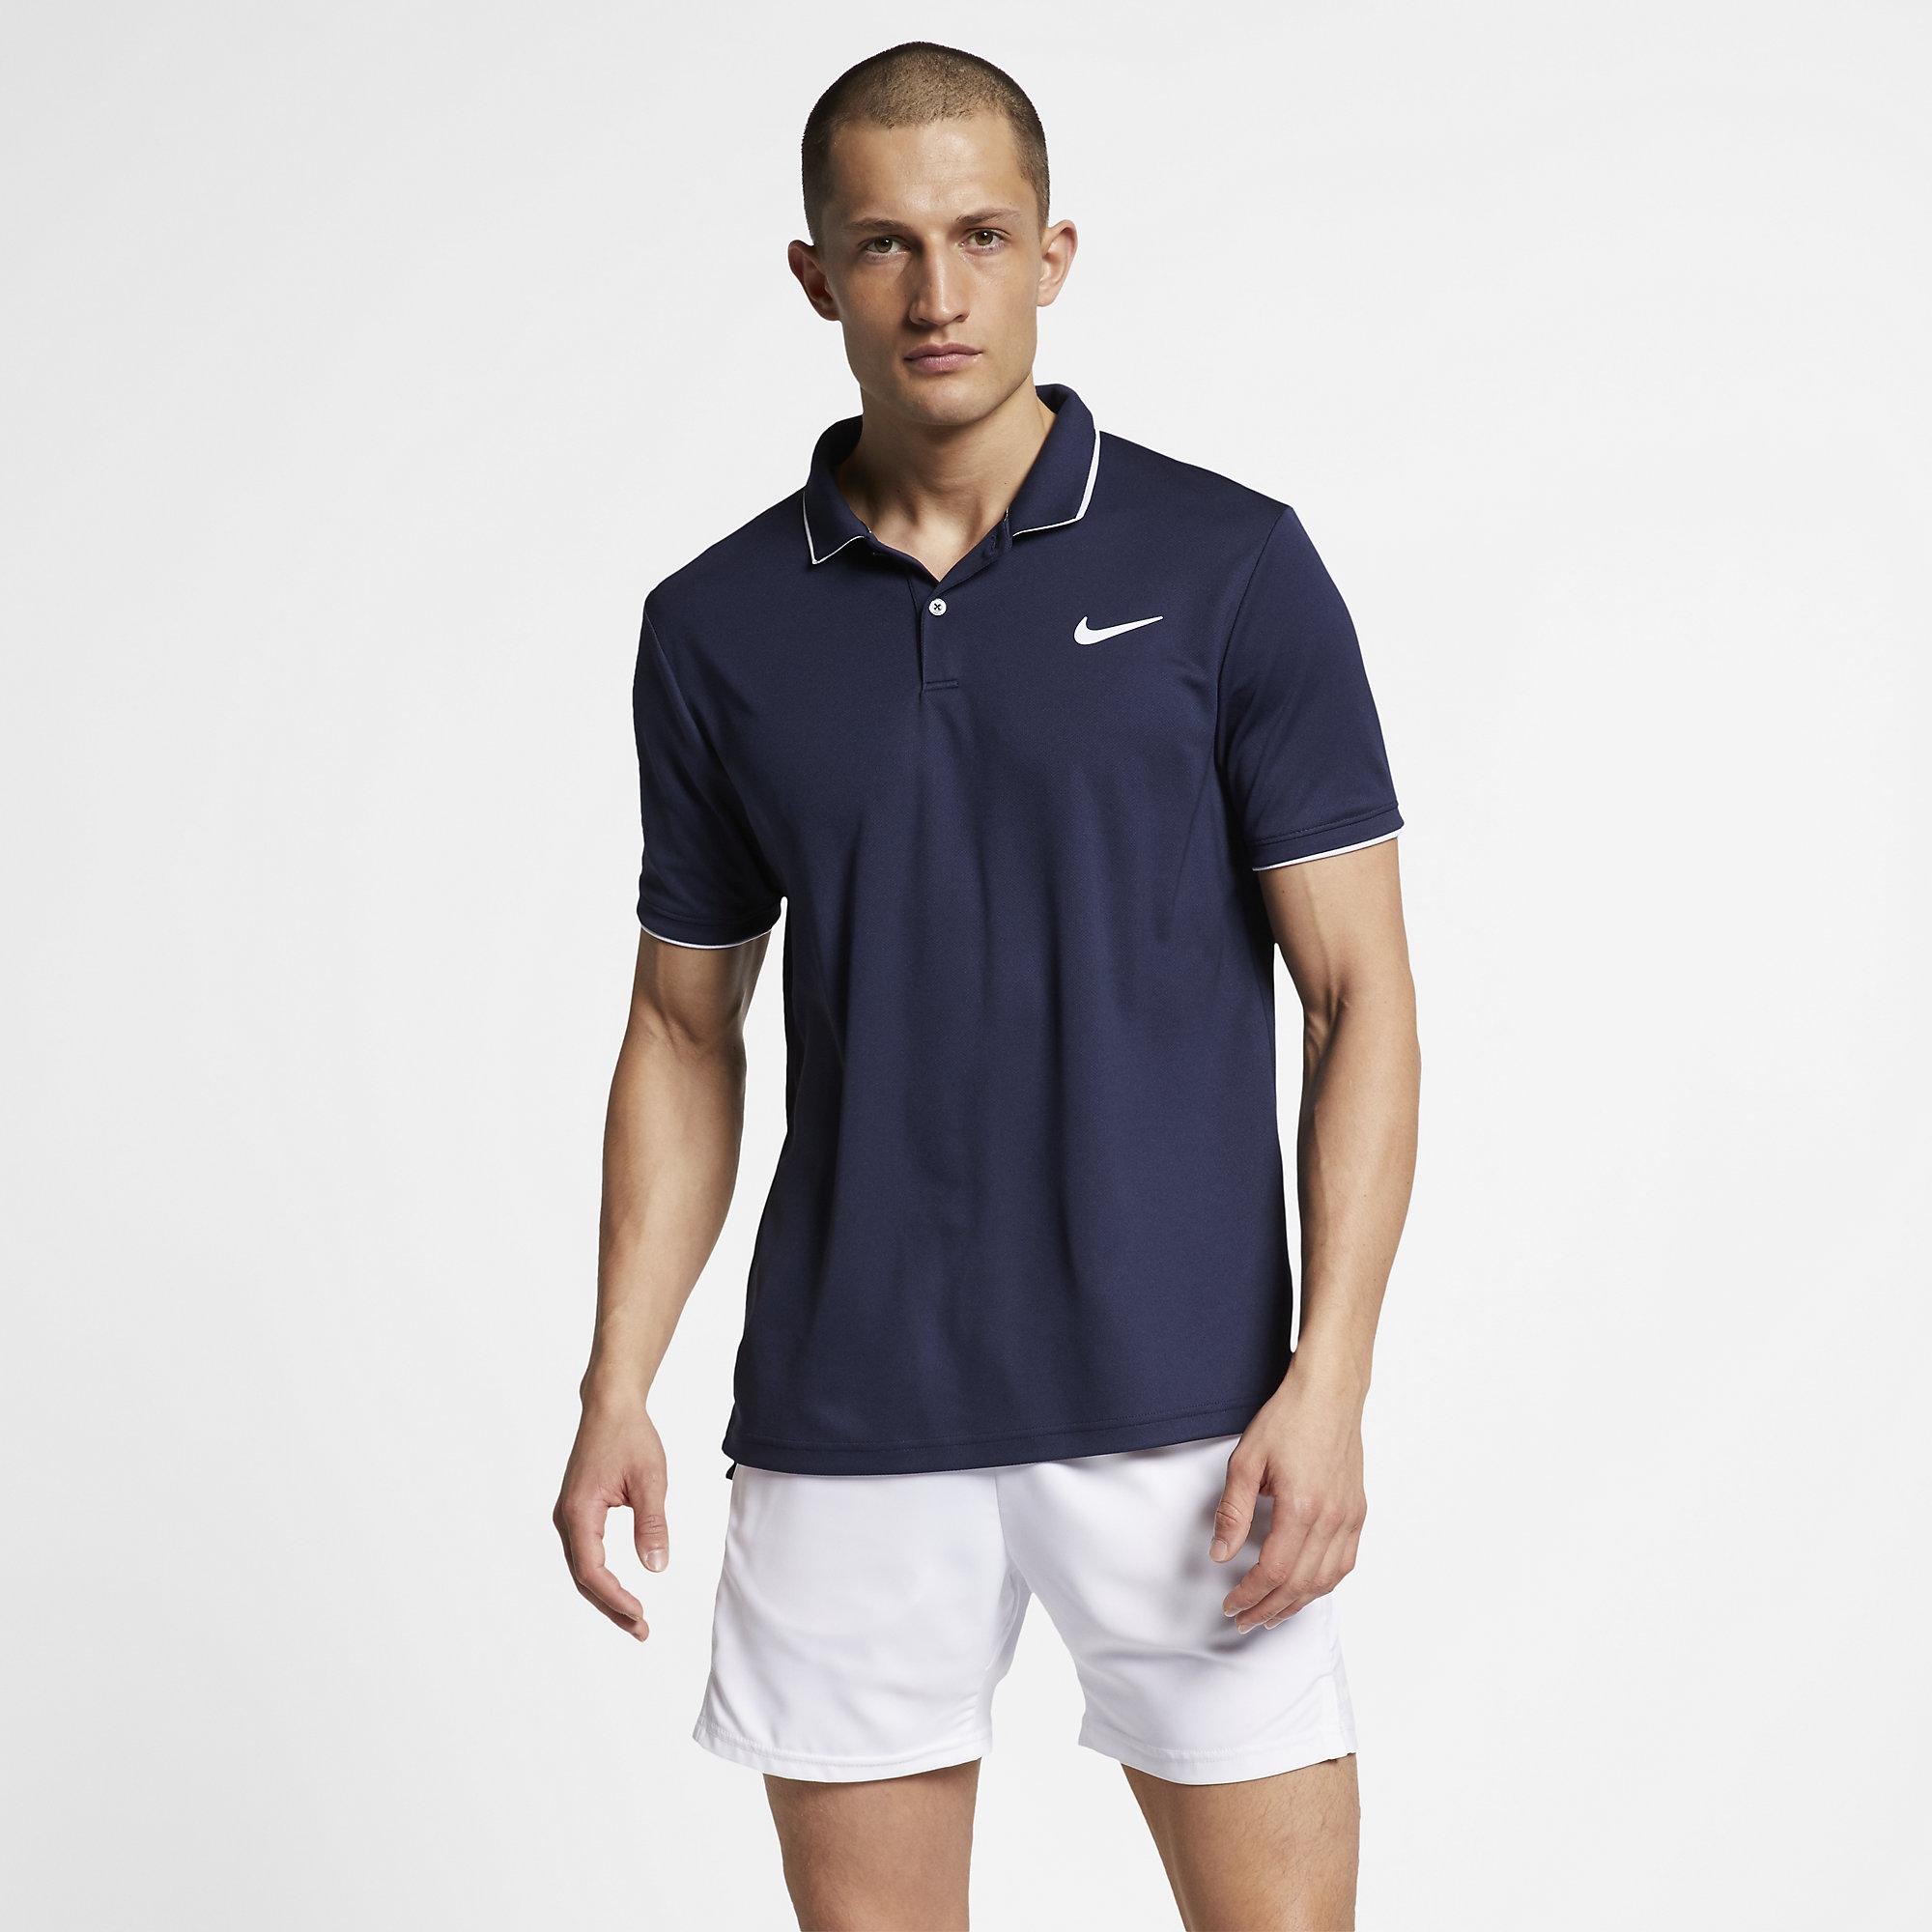 Nike Mens Dri-FIT Tennis Polo - Obsidian/White - Tennisnuts.com